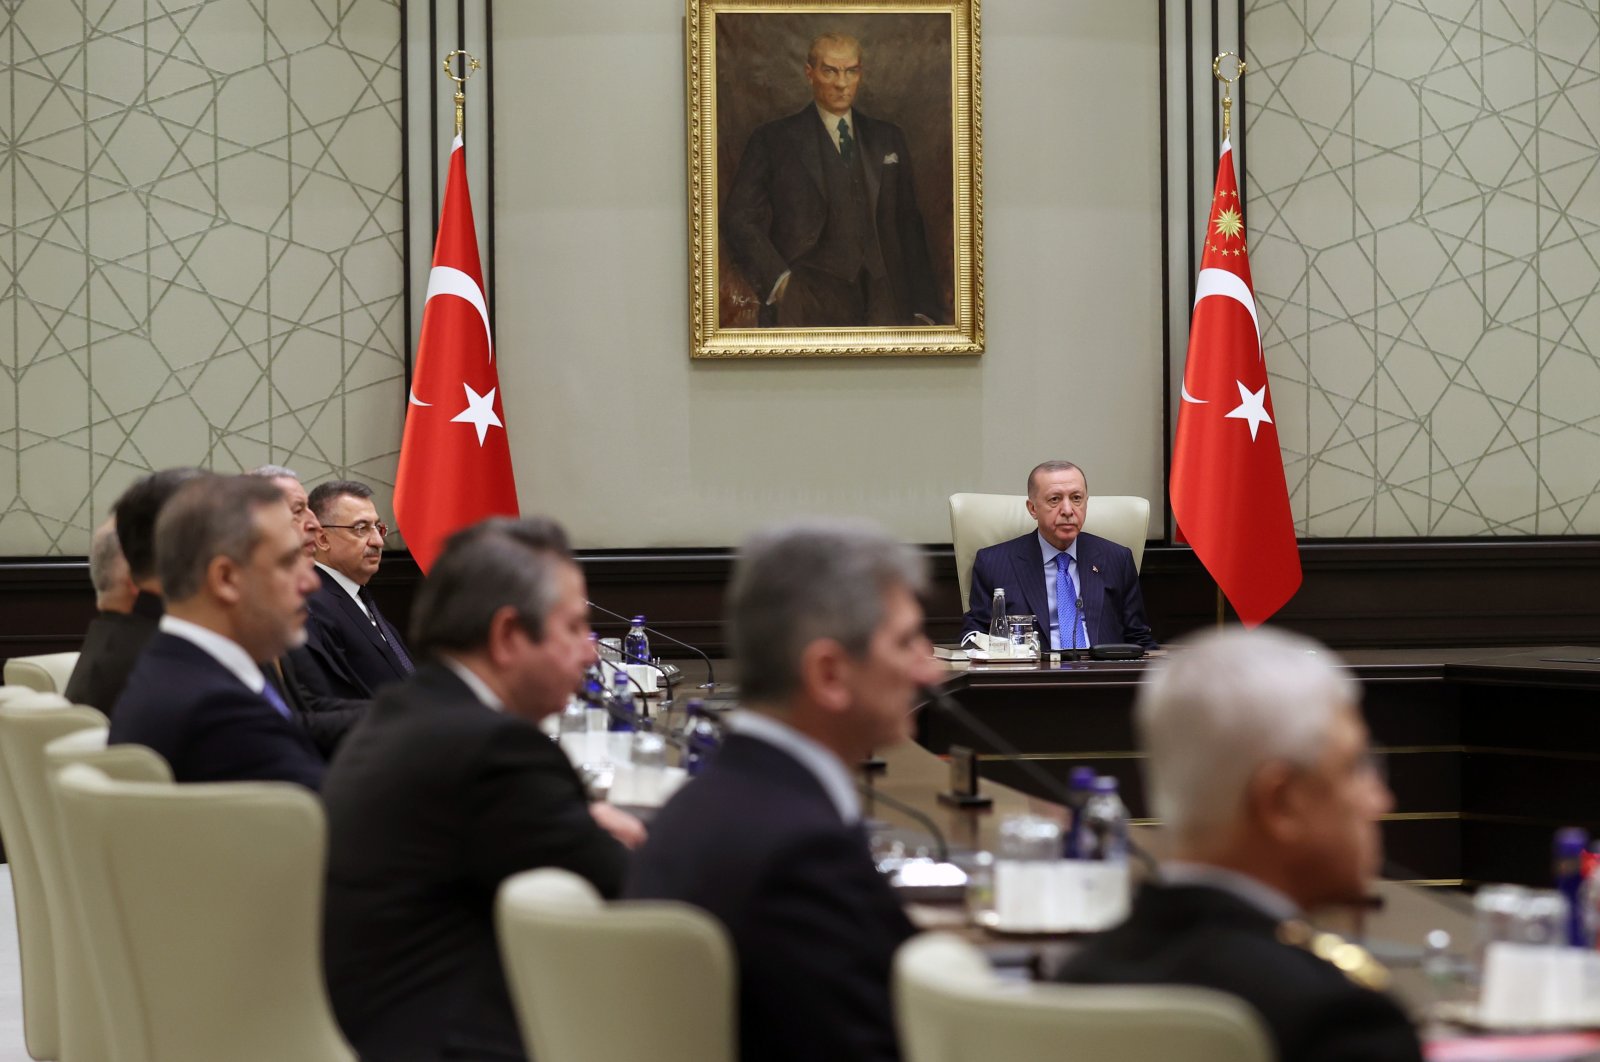 Erdoğan to Head Security Summit After Russia’s Invasion of Ukraine